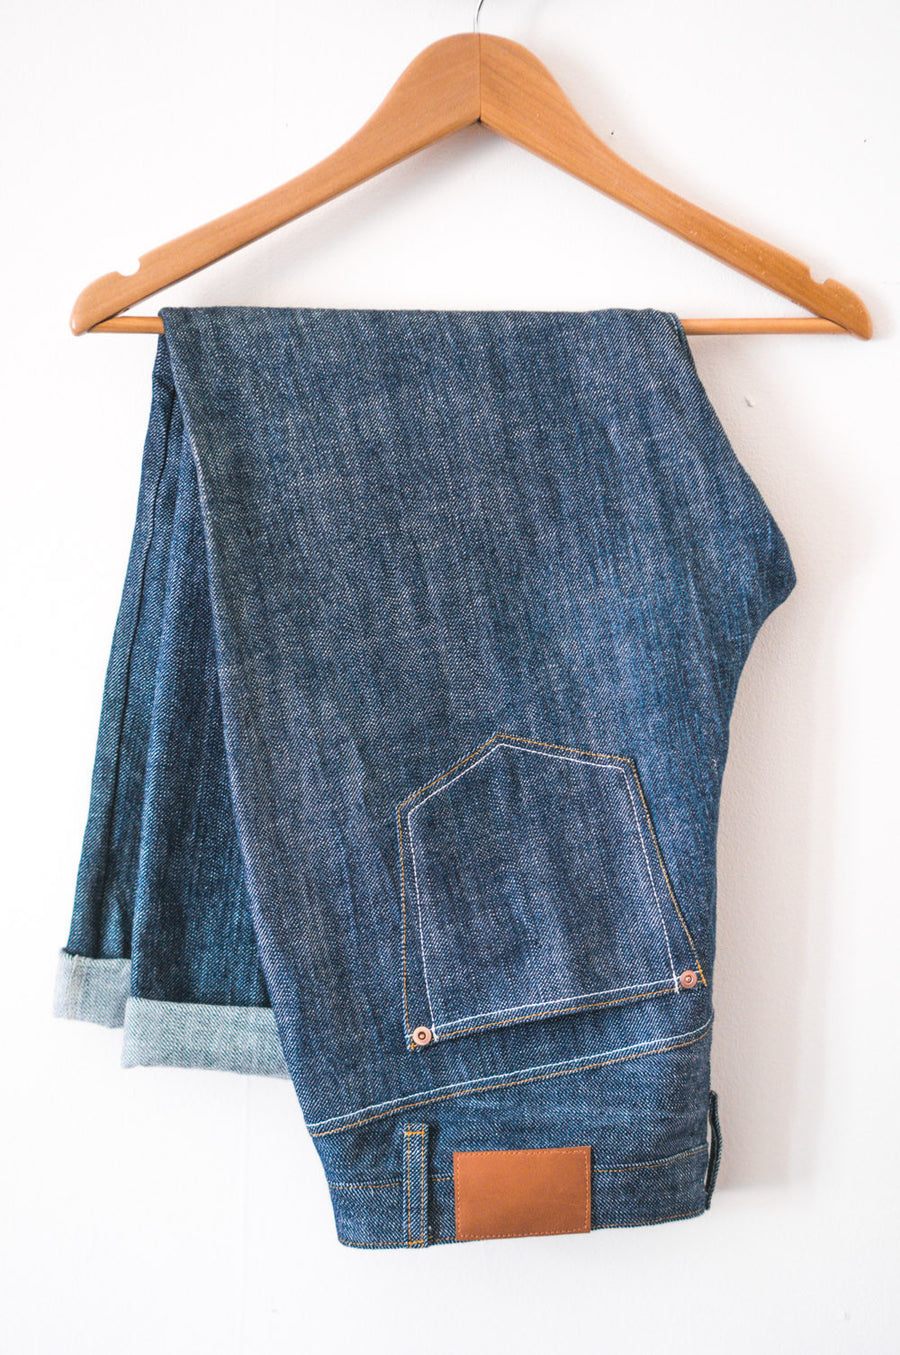 Closet Case Files Morgan Jeans - Tester Version — The Pug & Needle